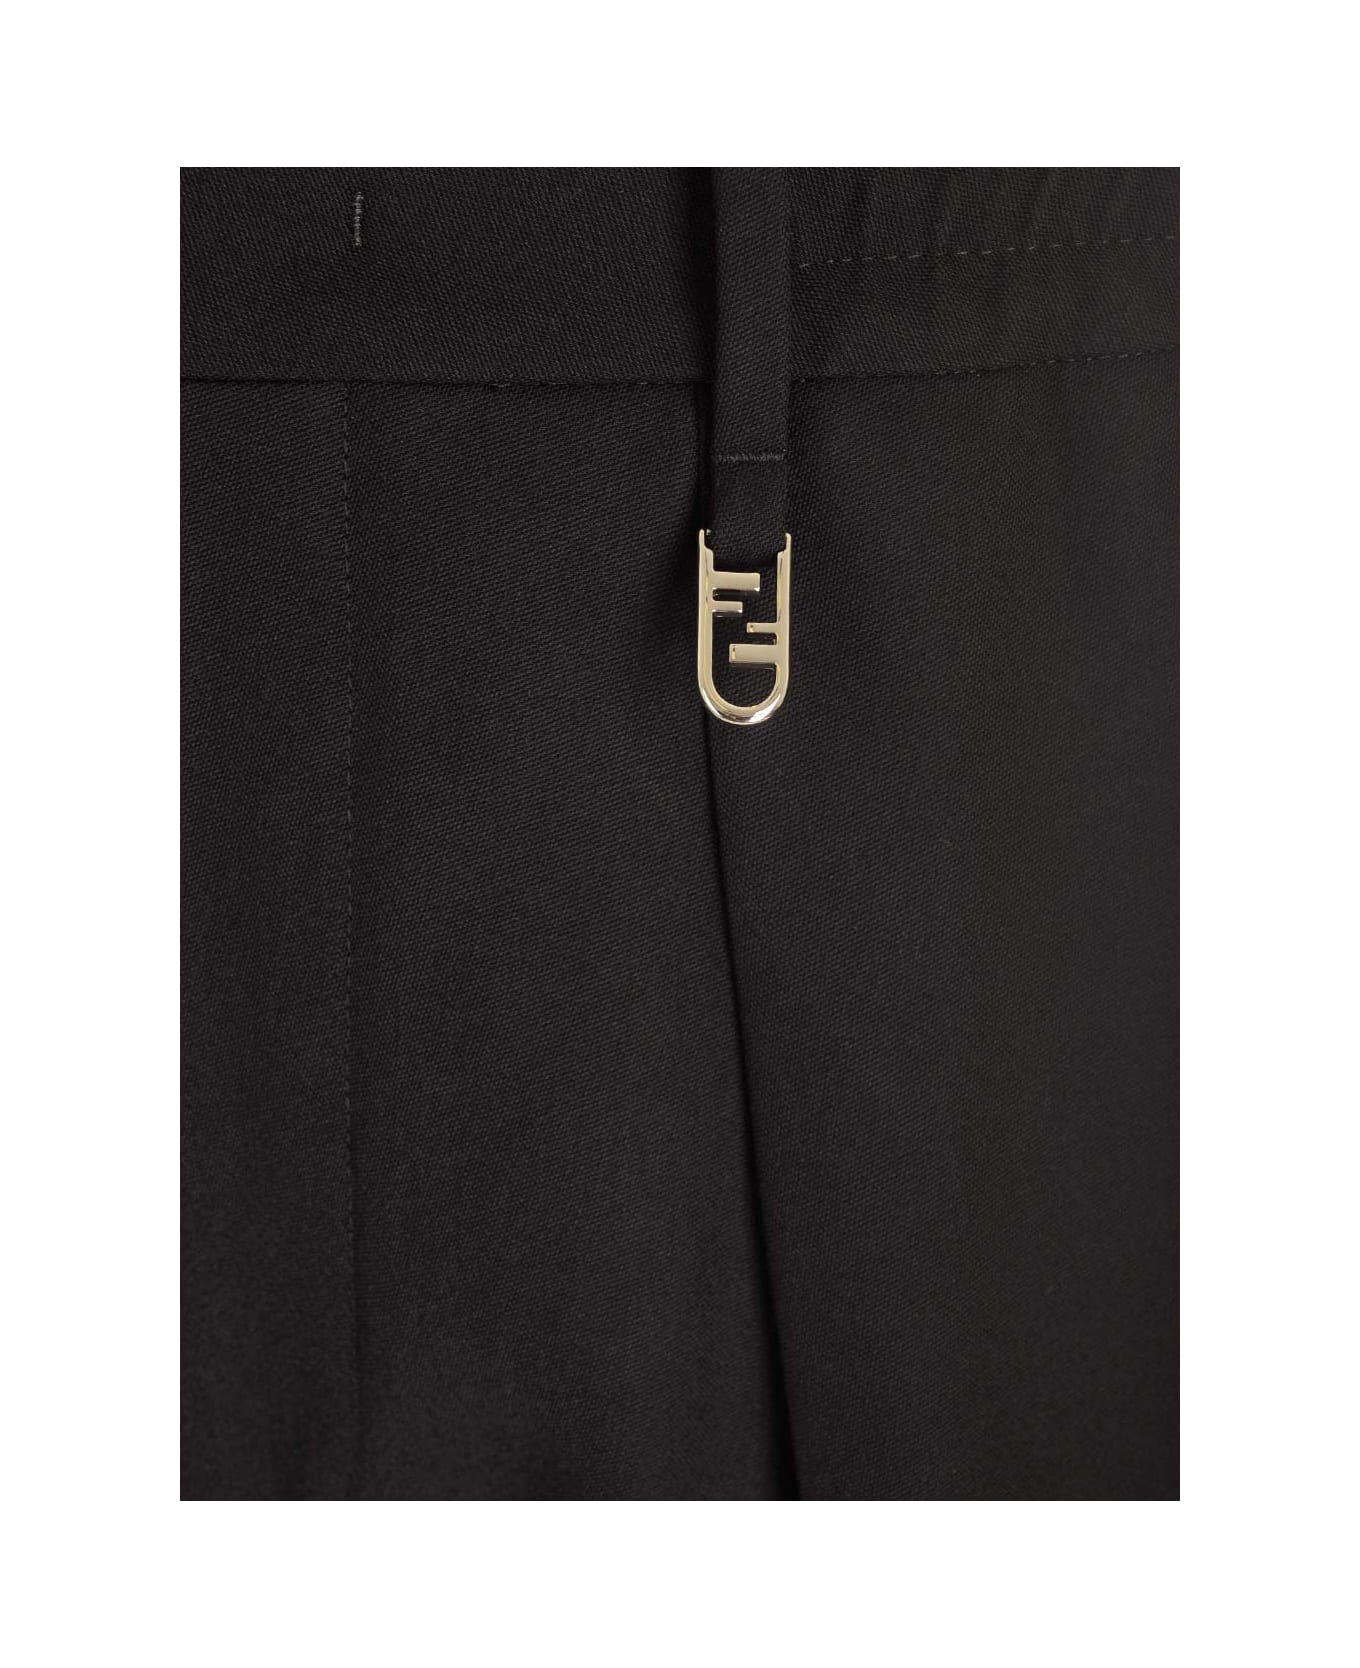 Fendi Wool Crepe Trousers - Black ボトムス